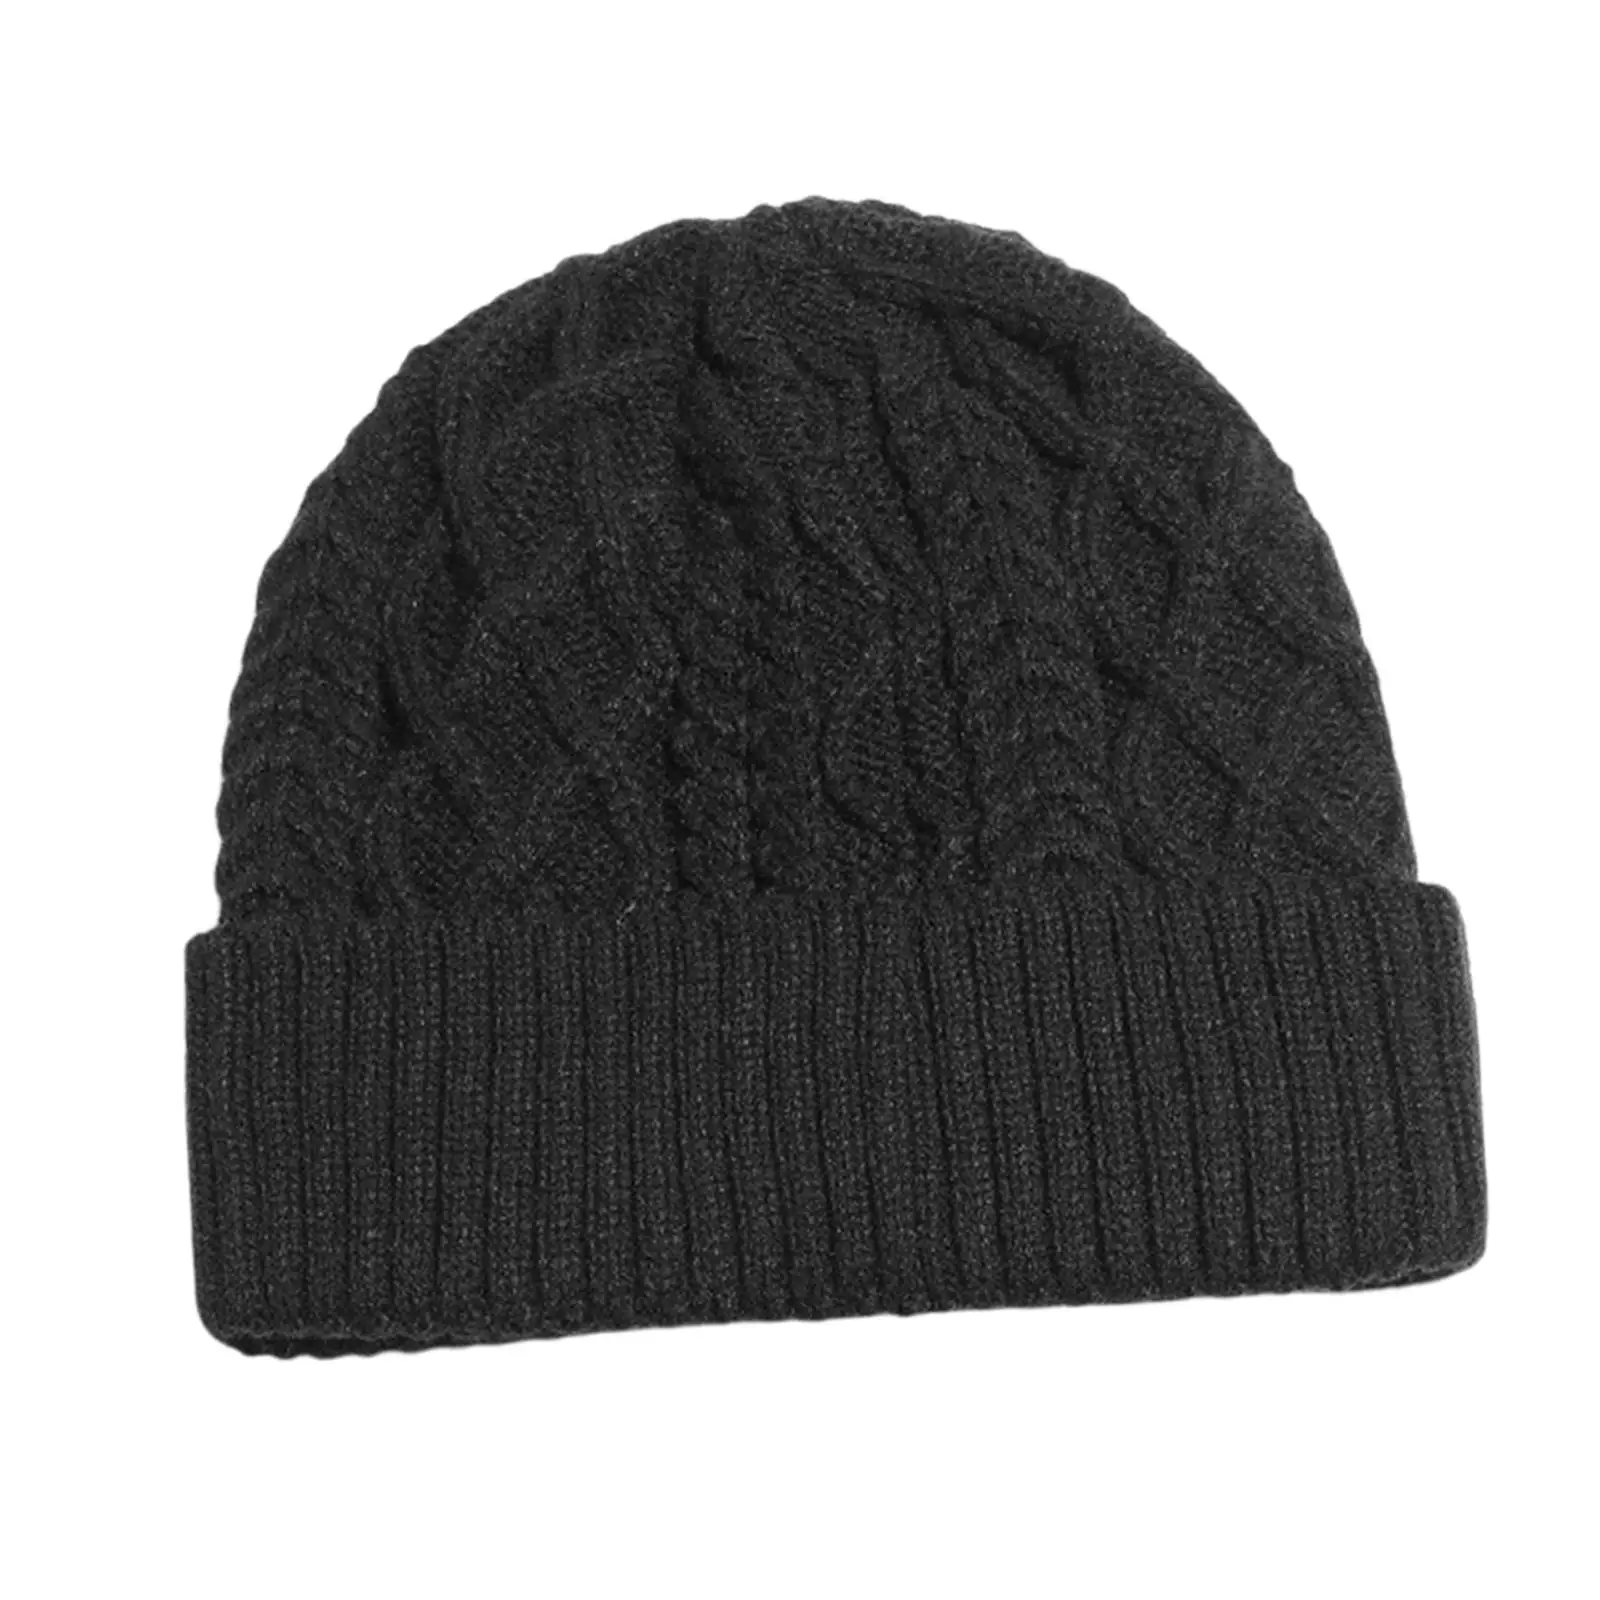 Men`s Winter Hats Knit Cuff Beanie Caps Warm Daily Beanie Hat